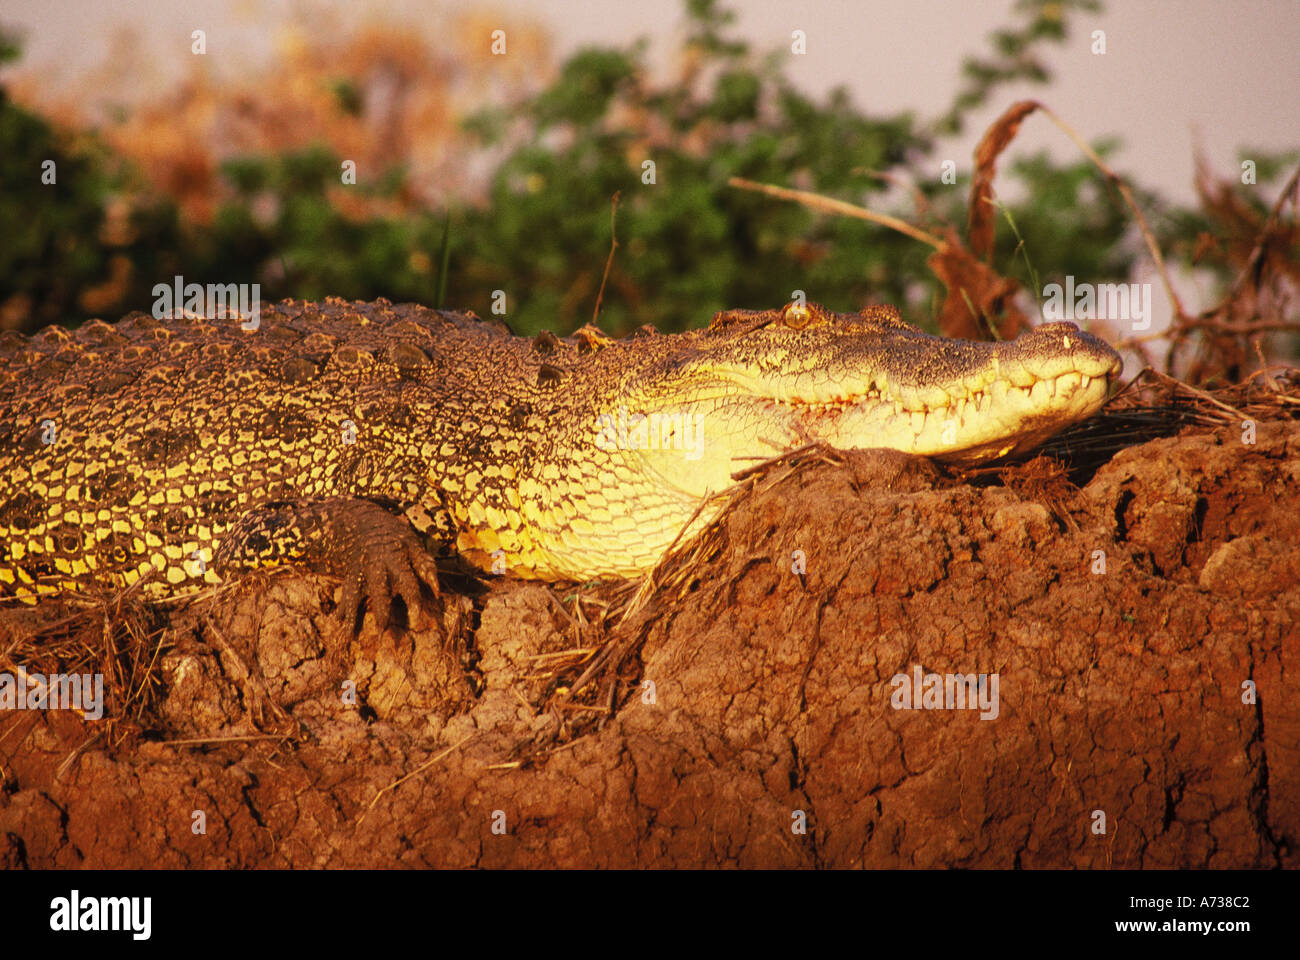 Saltwater crocodile Crocodylus porosus basking on river bank Mary River Northern Australia Stock Photo